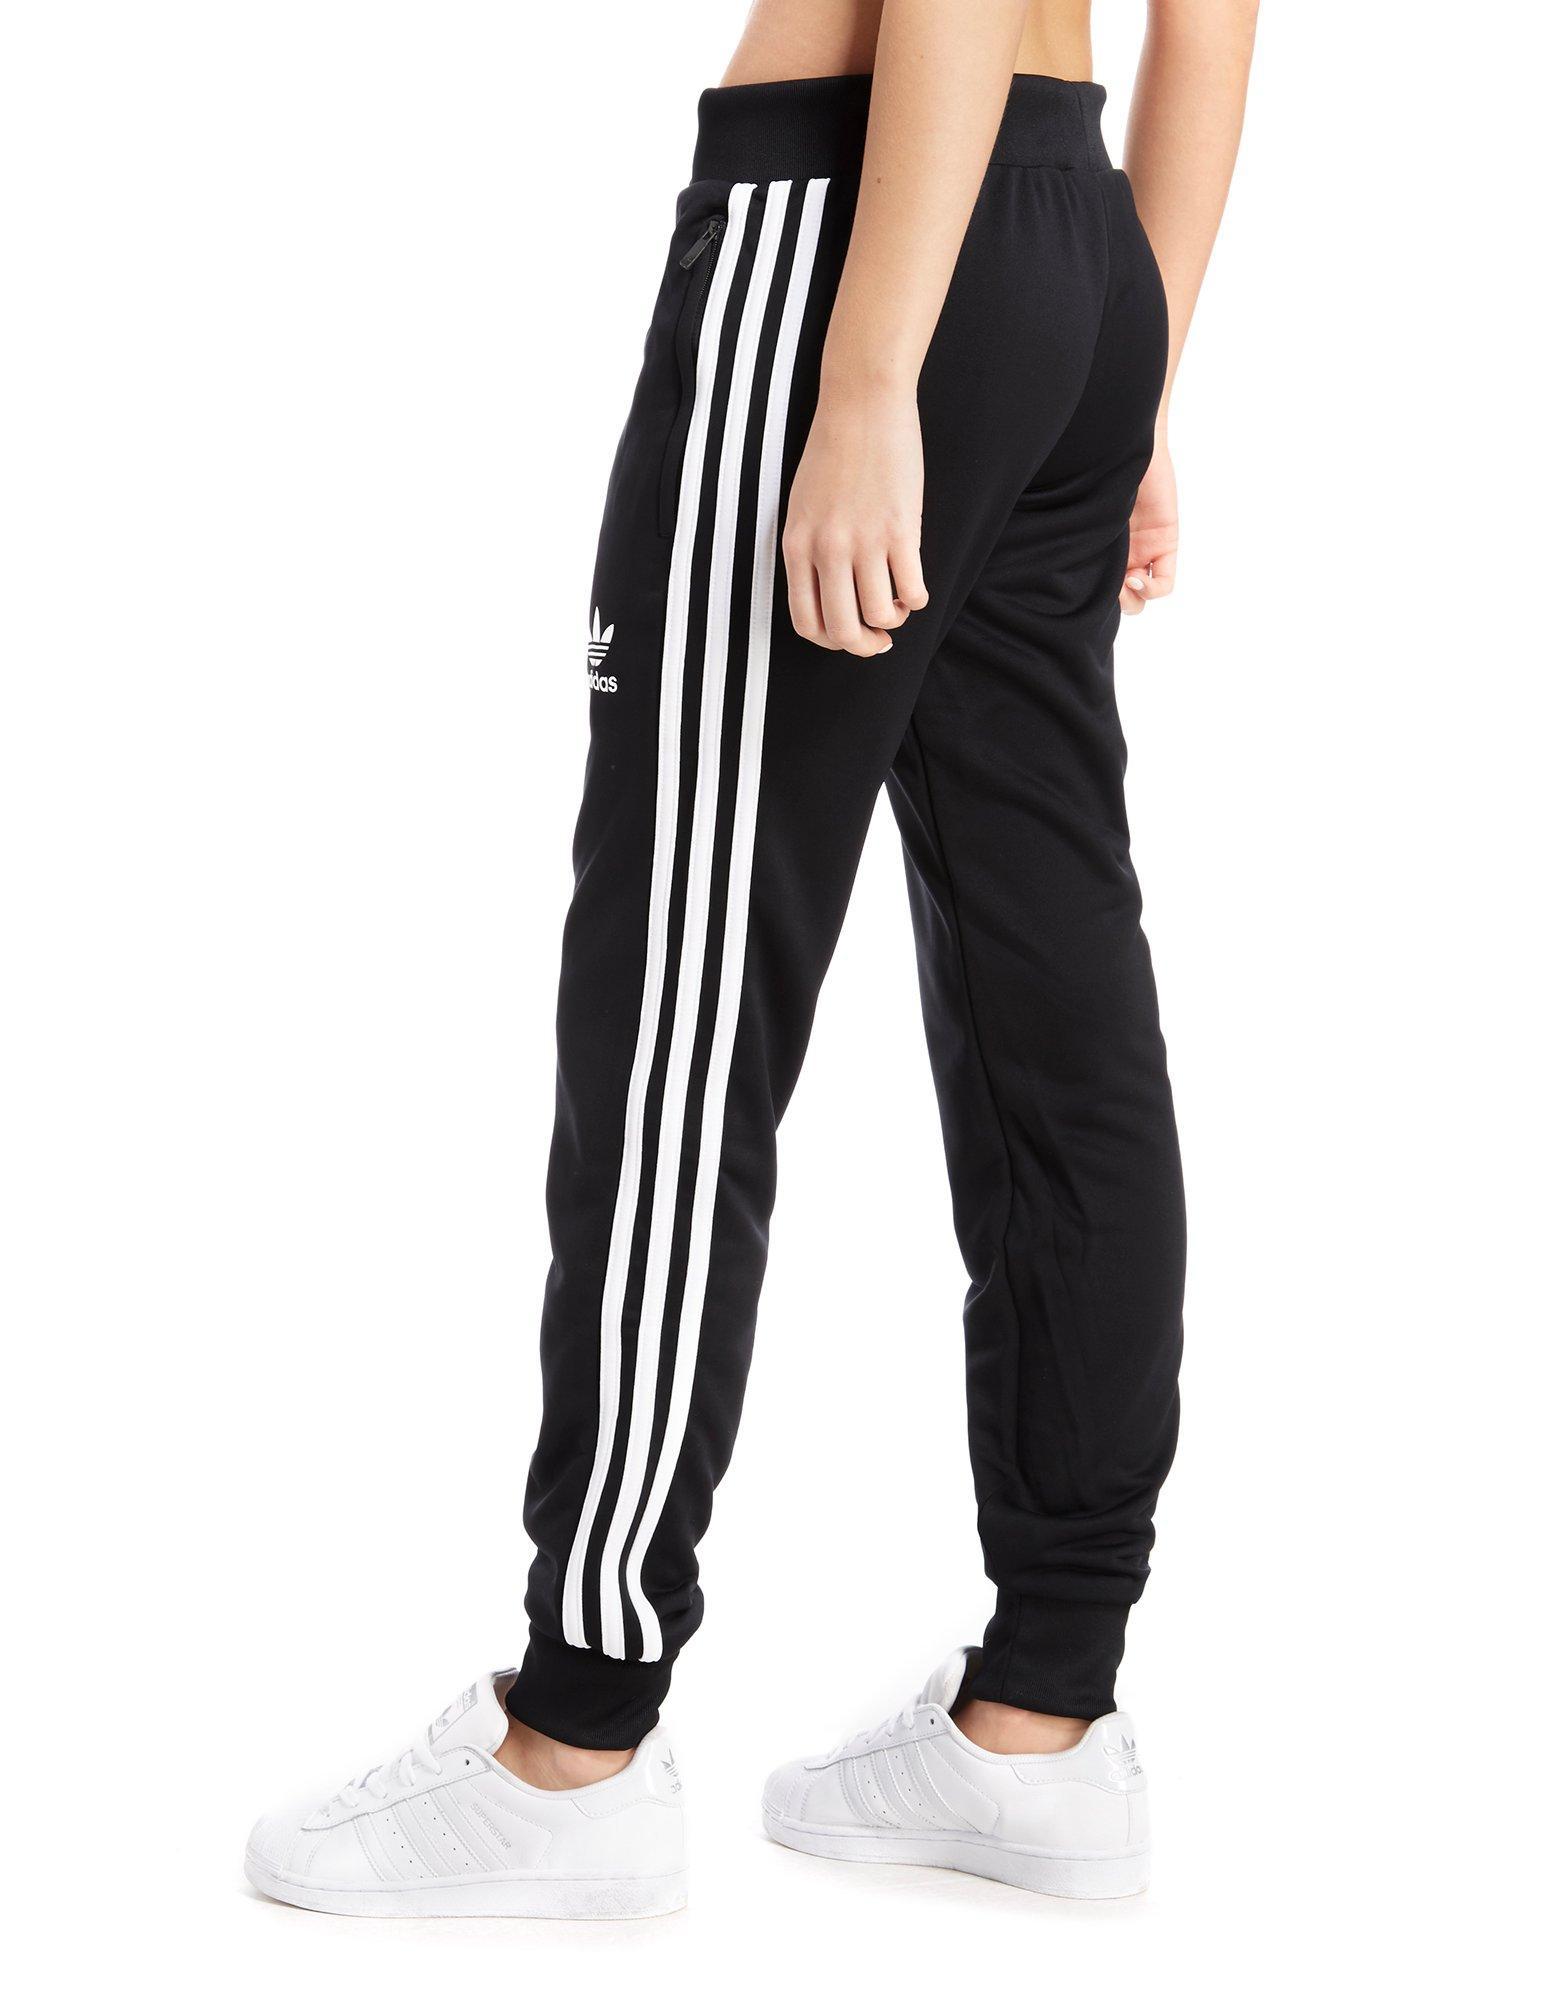 Buy > adidas mens 3 stripe pants > in stock